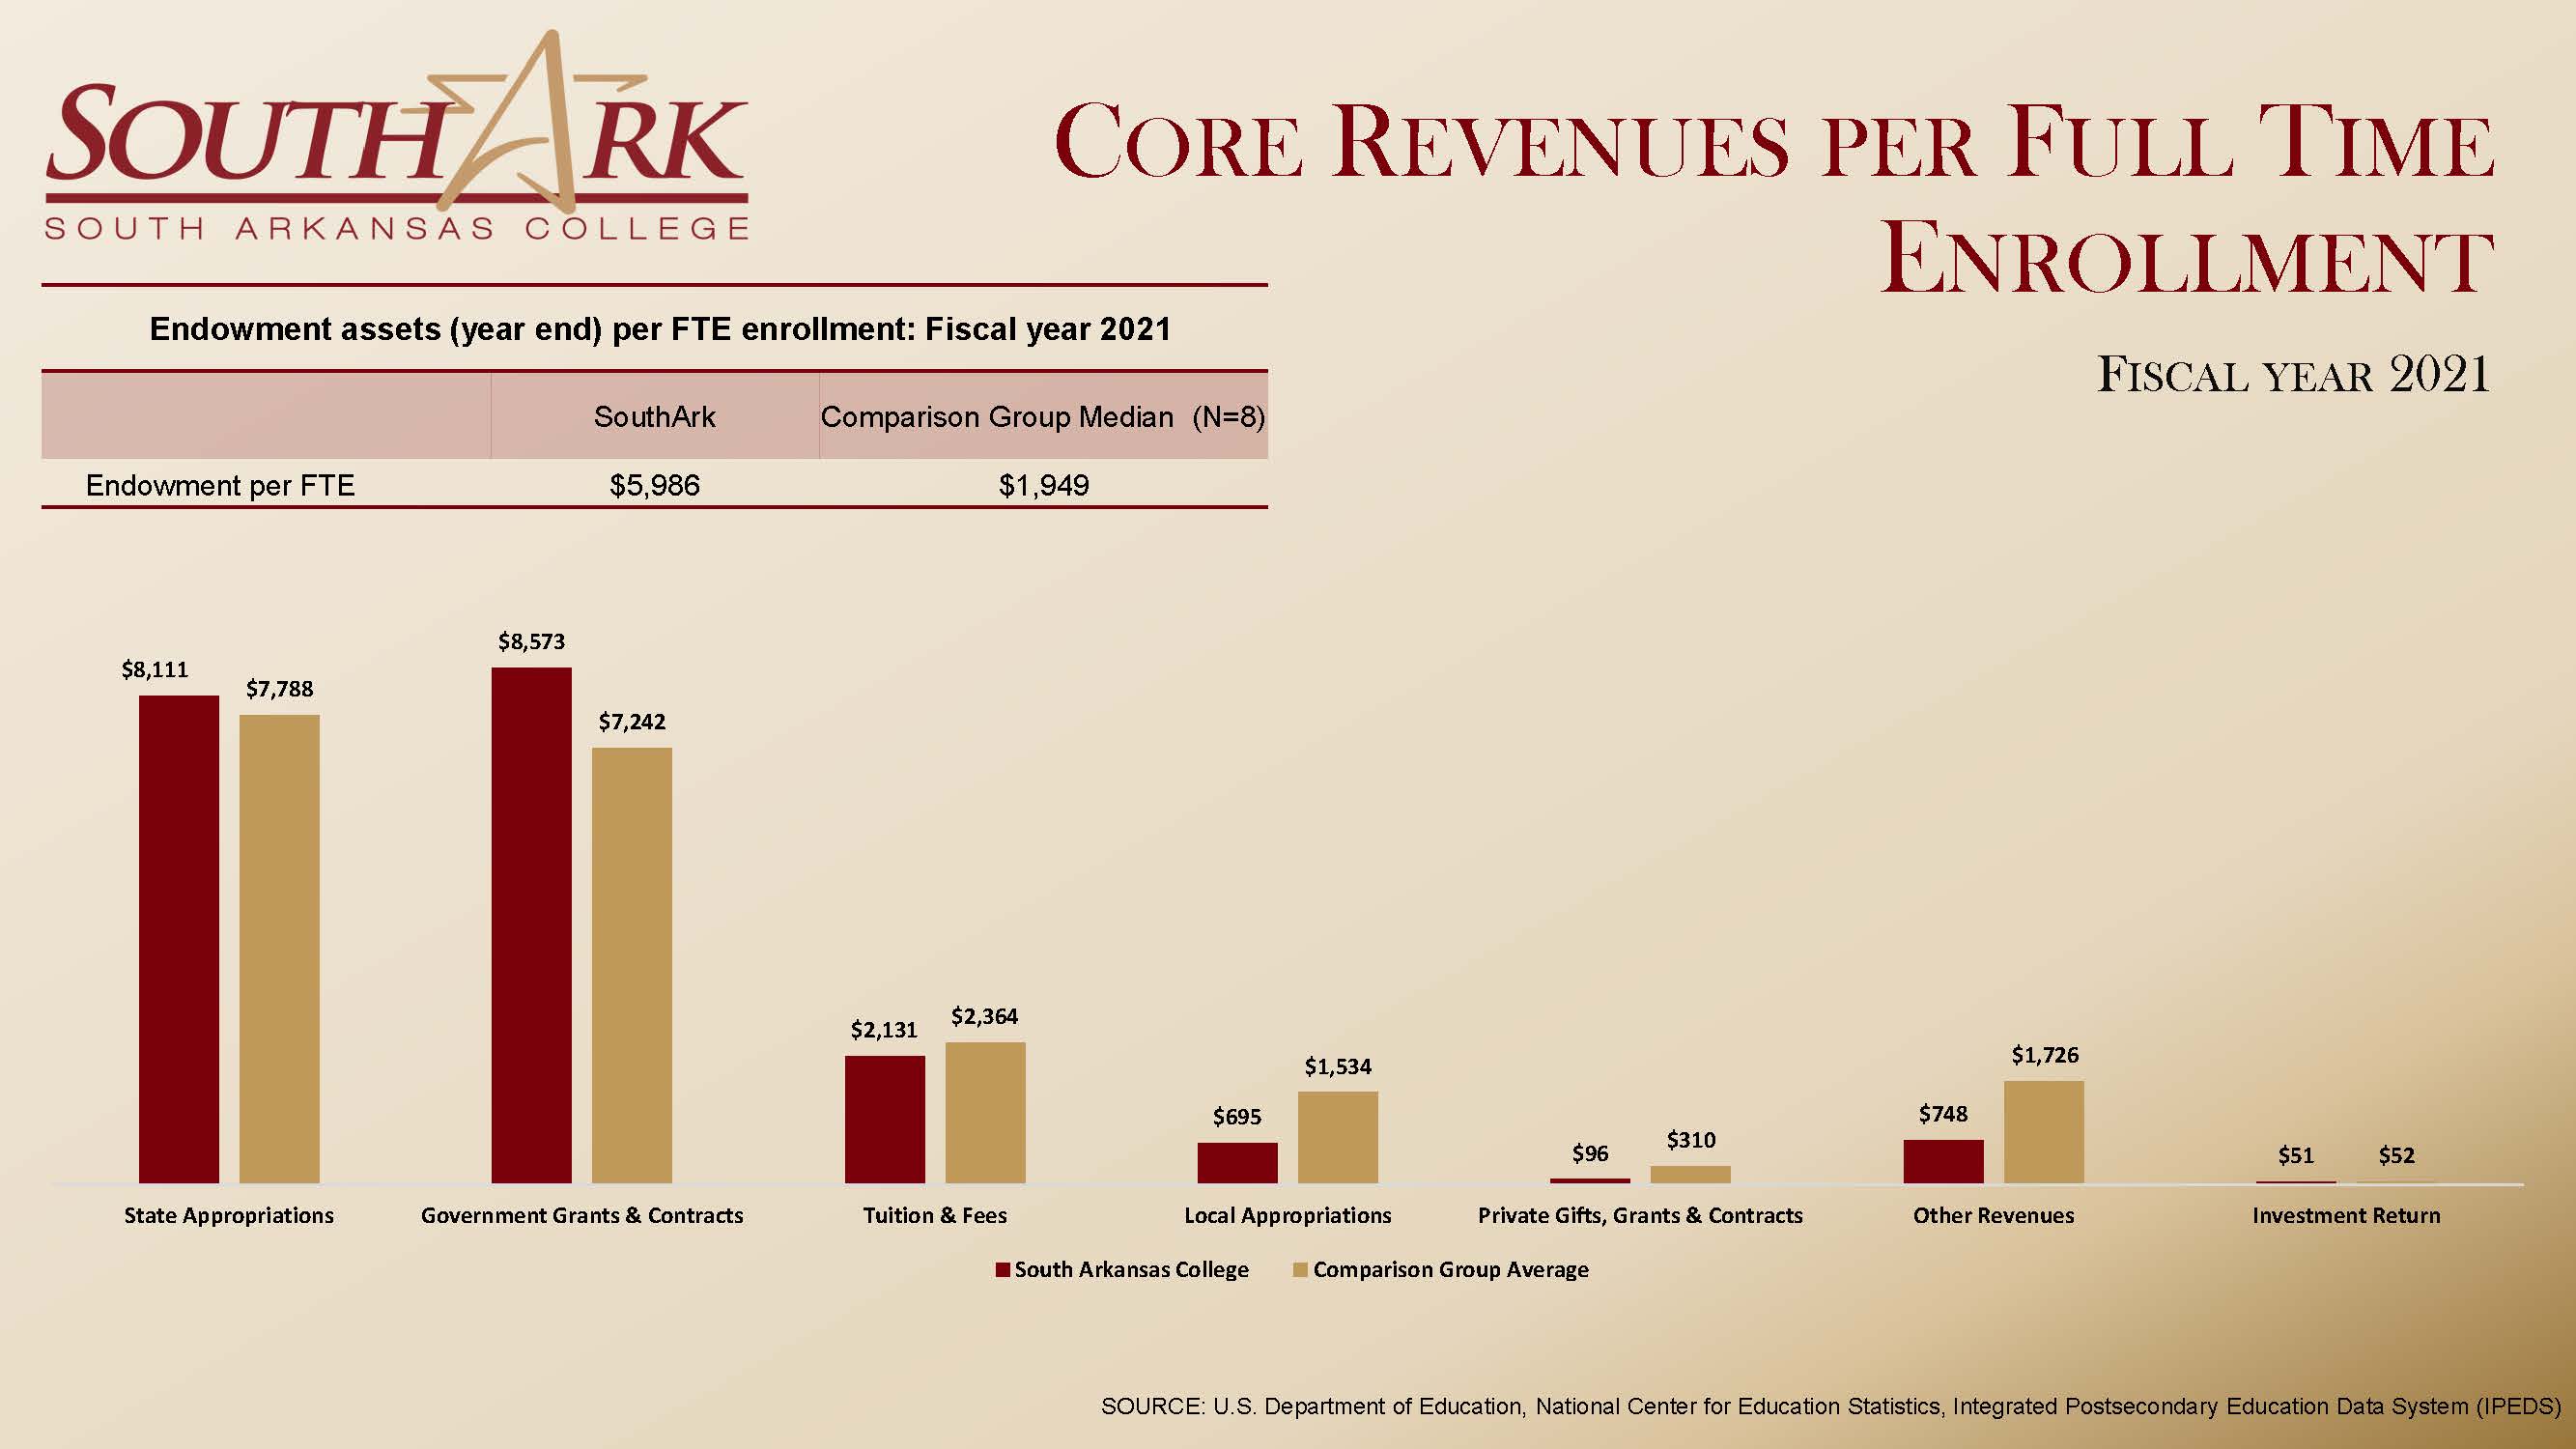 Core Revenues per Full time Enrollment Fiscal Year 2021